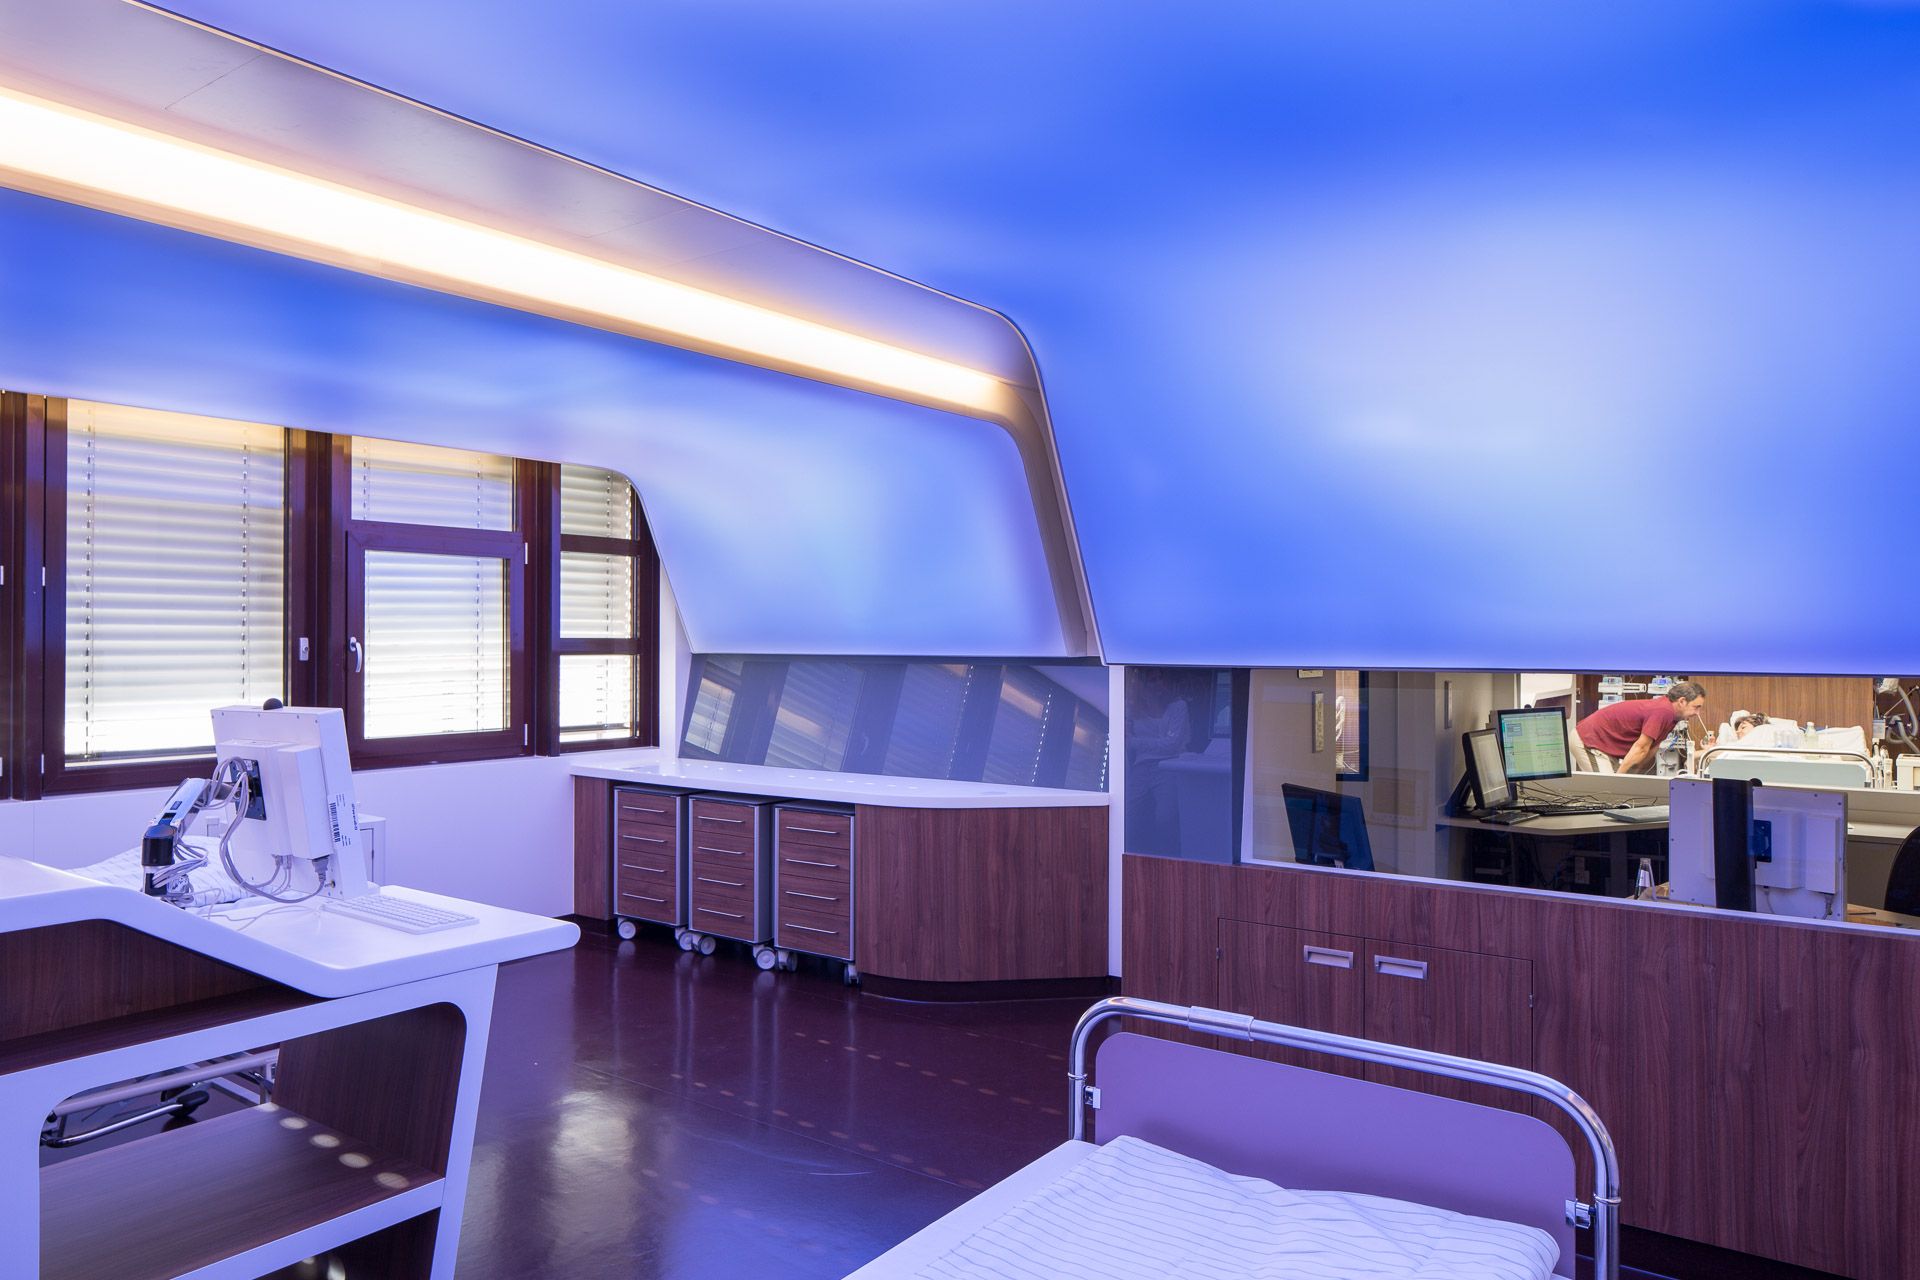 GRAFT ICU Rooms Charite Healing Architecture